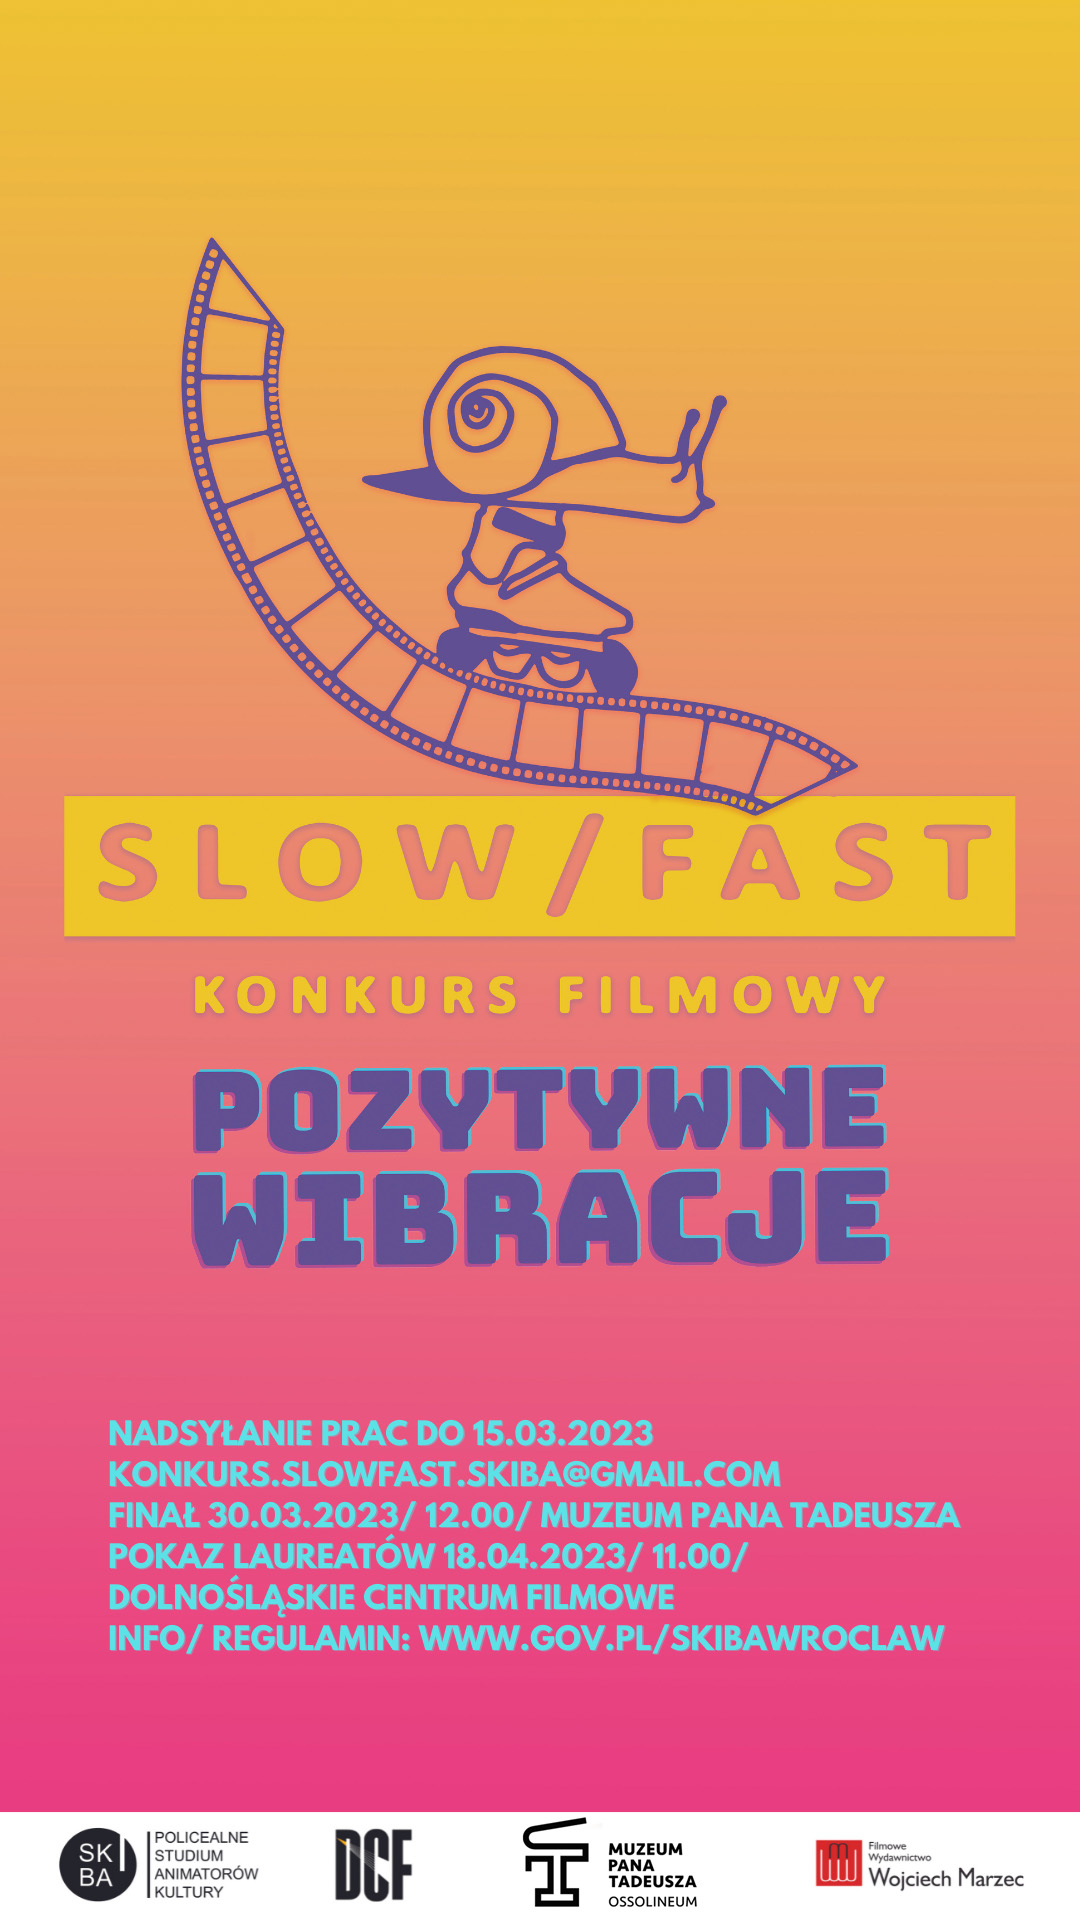 Plakat Slow/Fast 2023